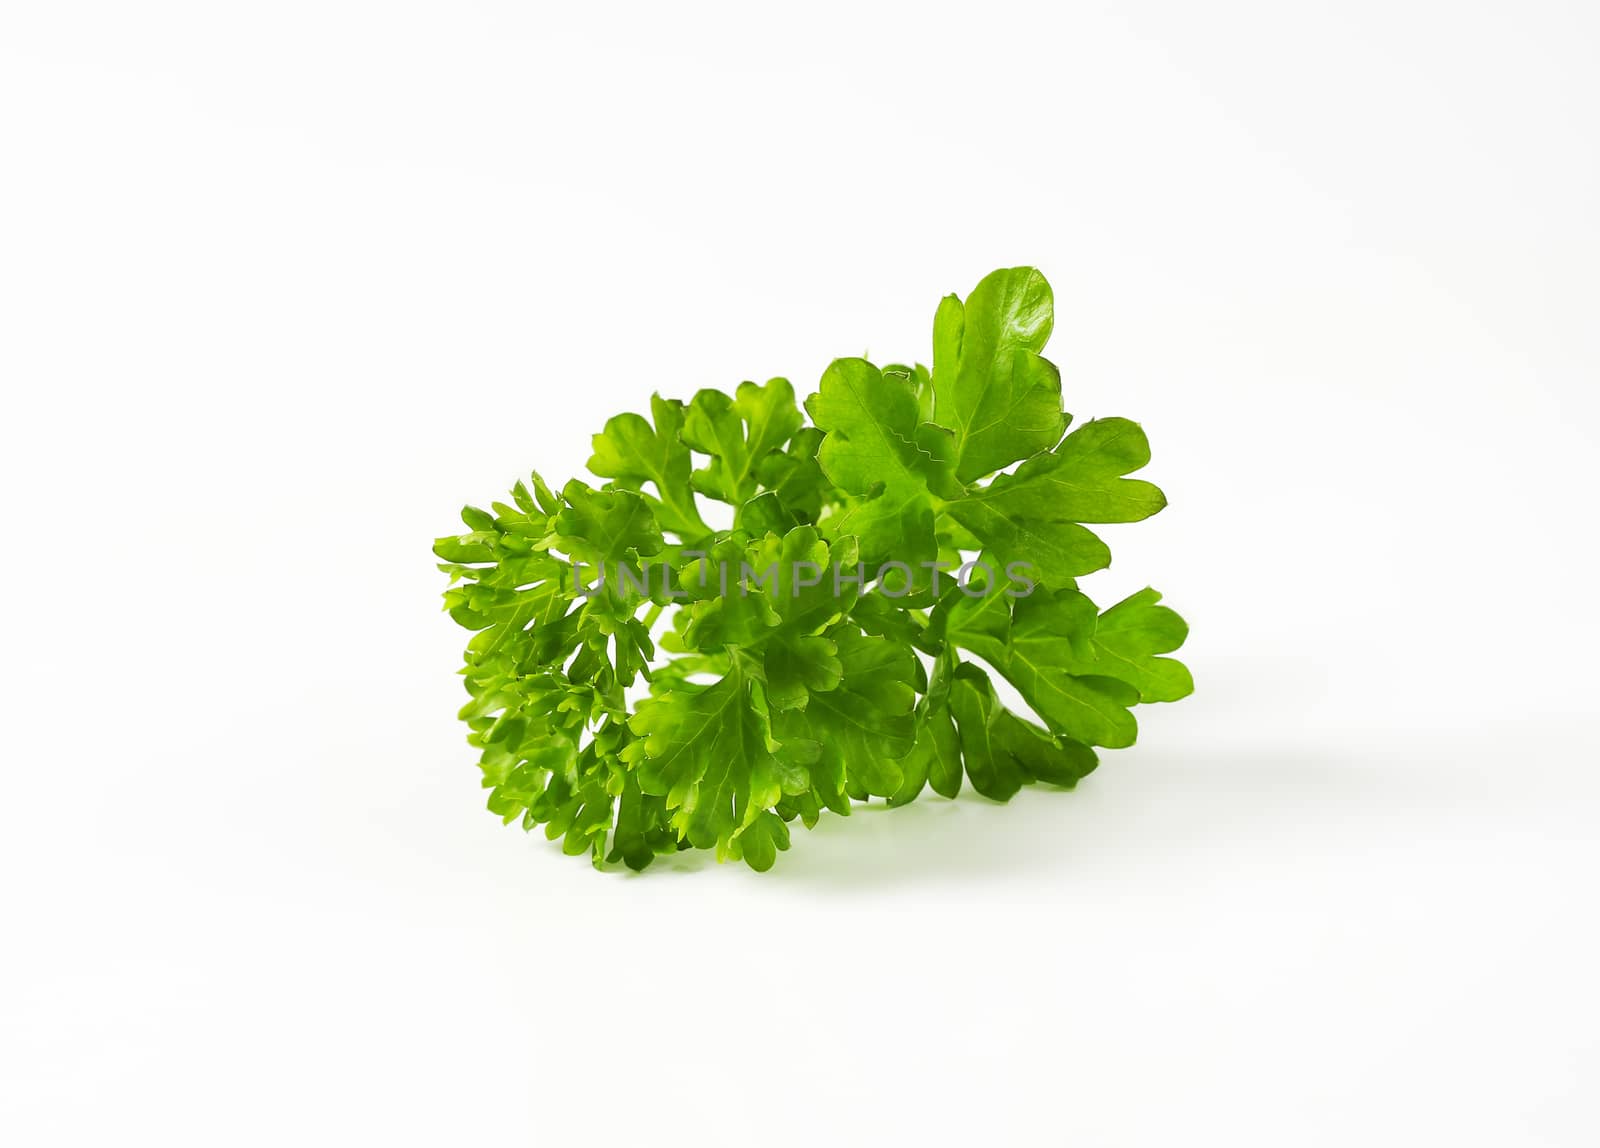 Fresh parsley sprigs by Digifoodstock